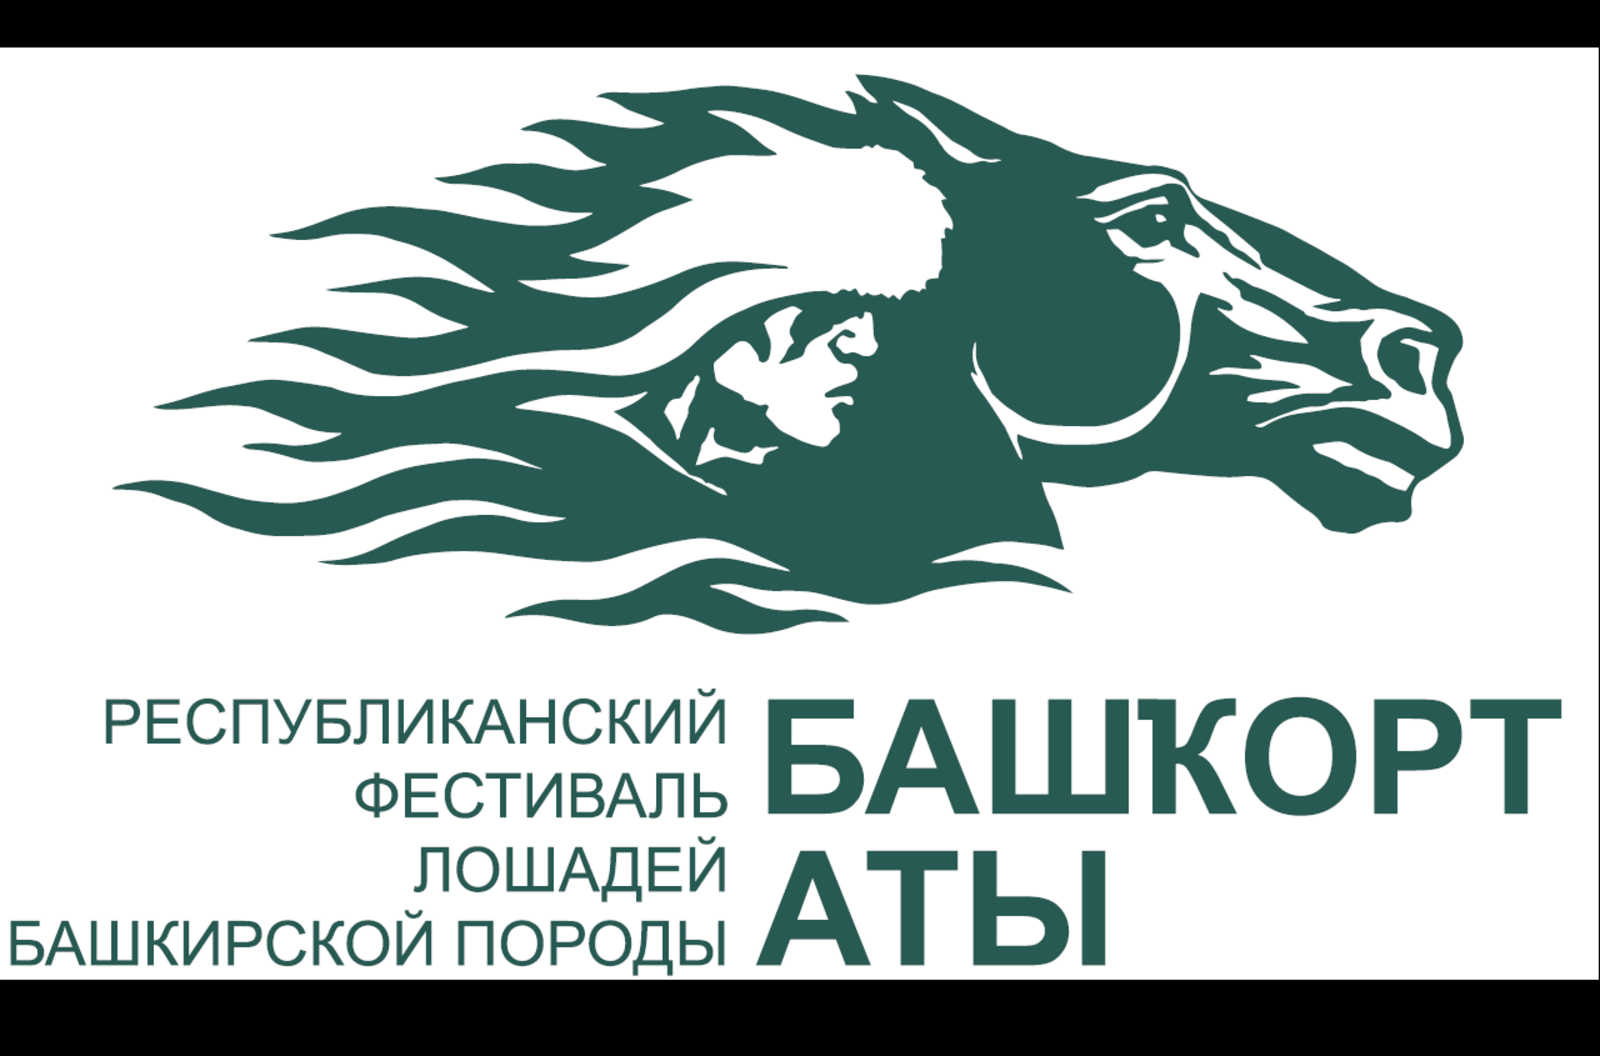 В Башкирии на фестивале «Башкорт аты» обсудят проблемы коневодства